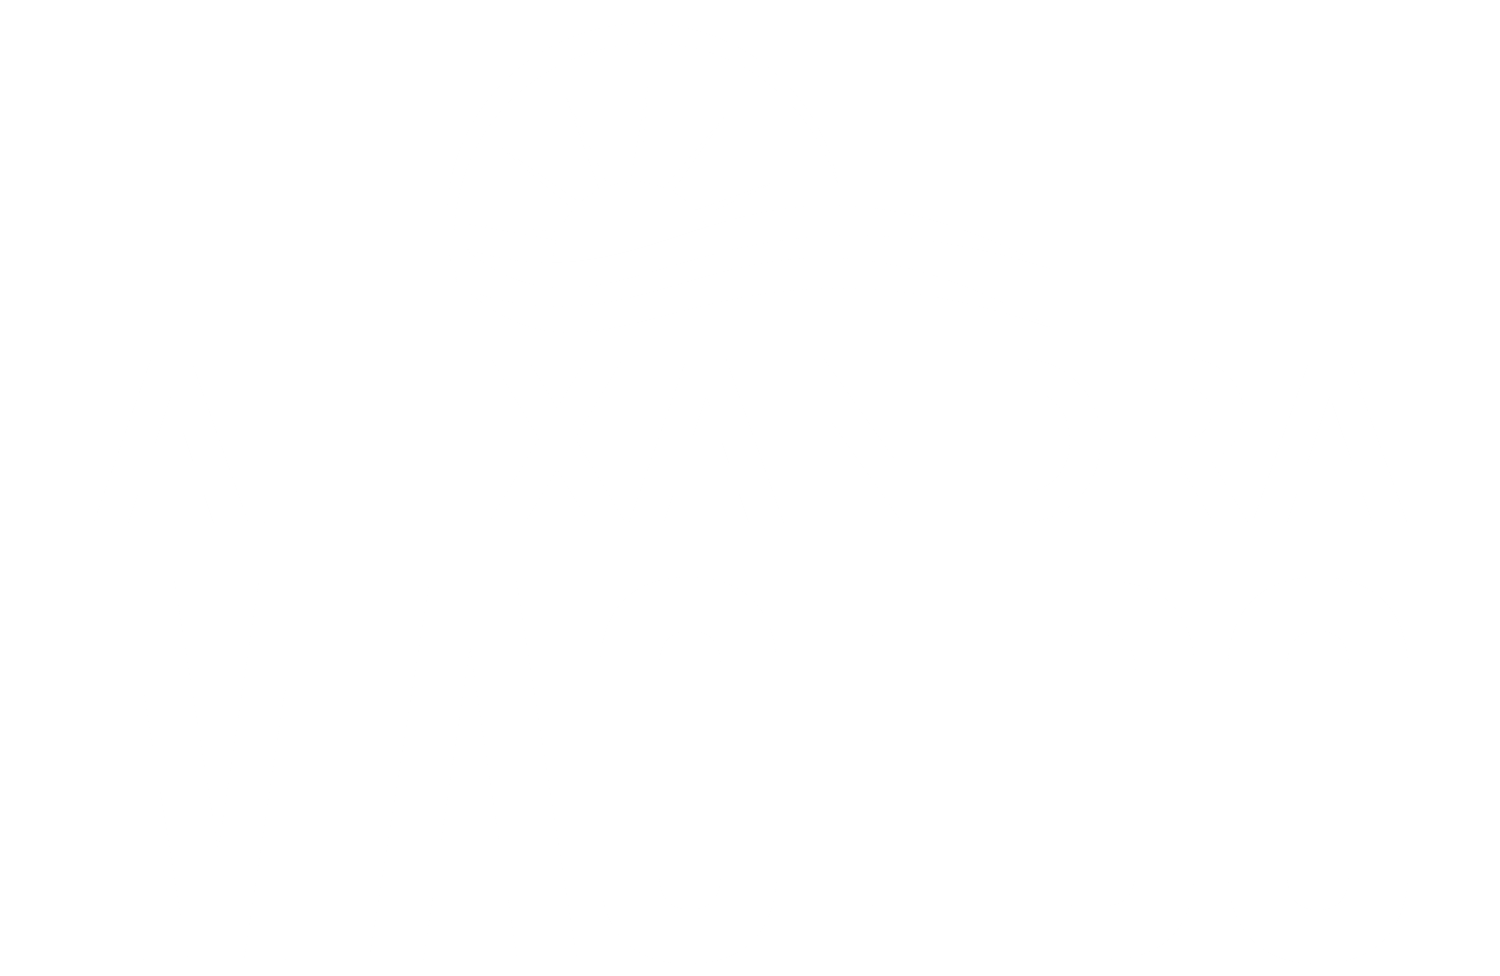 Alexandra Macedo for State Assembly